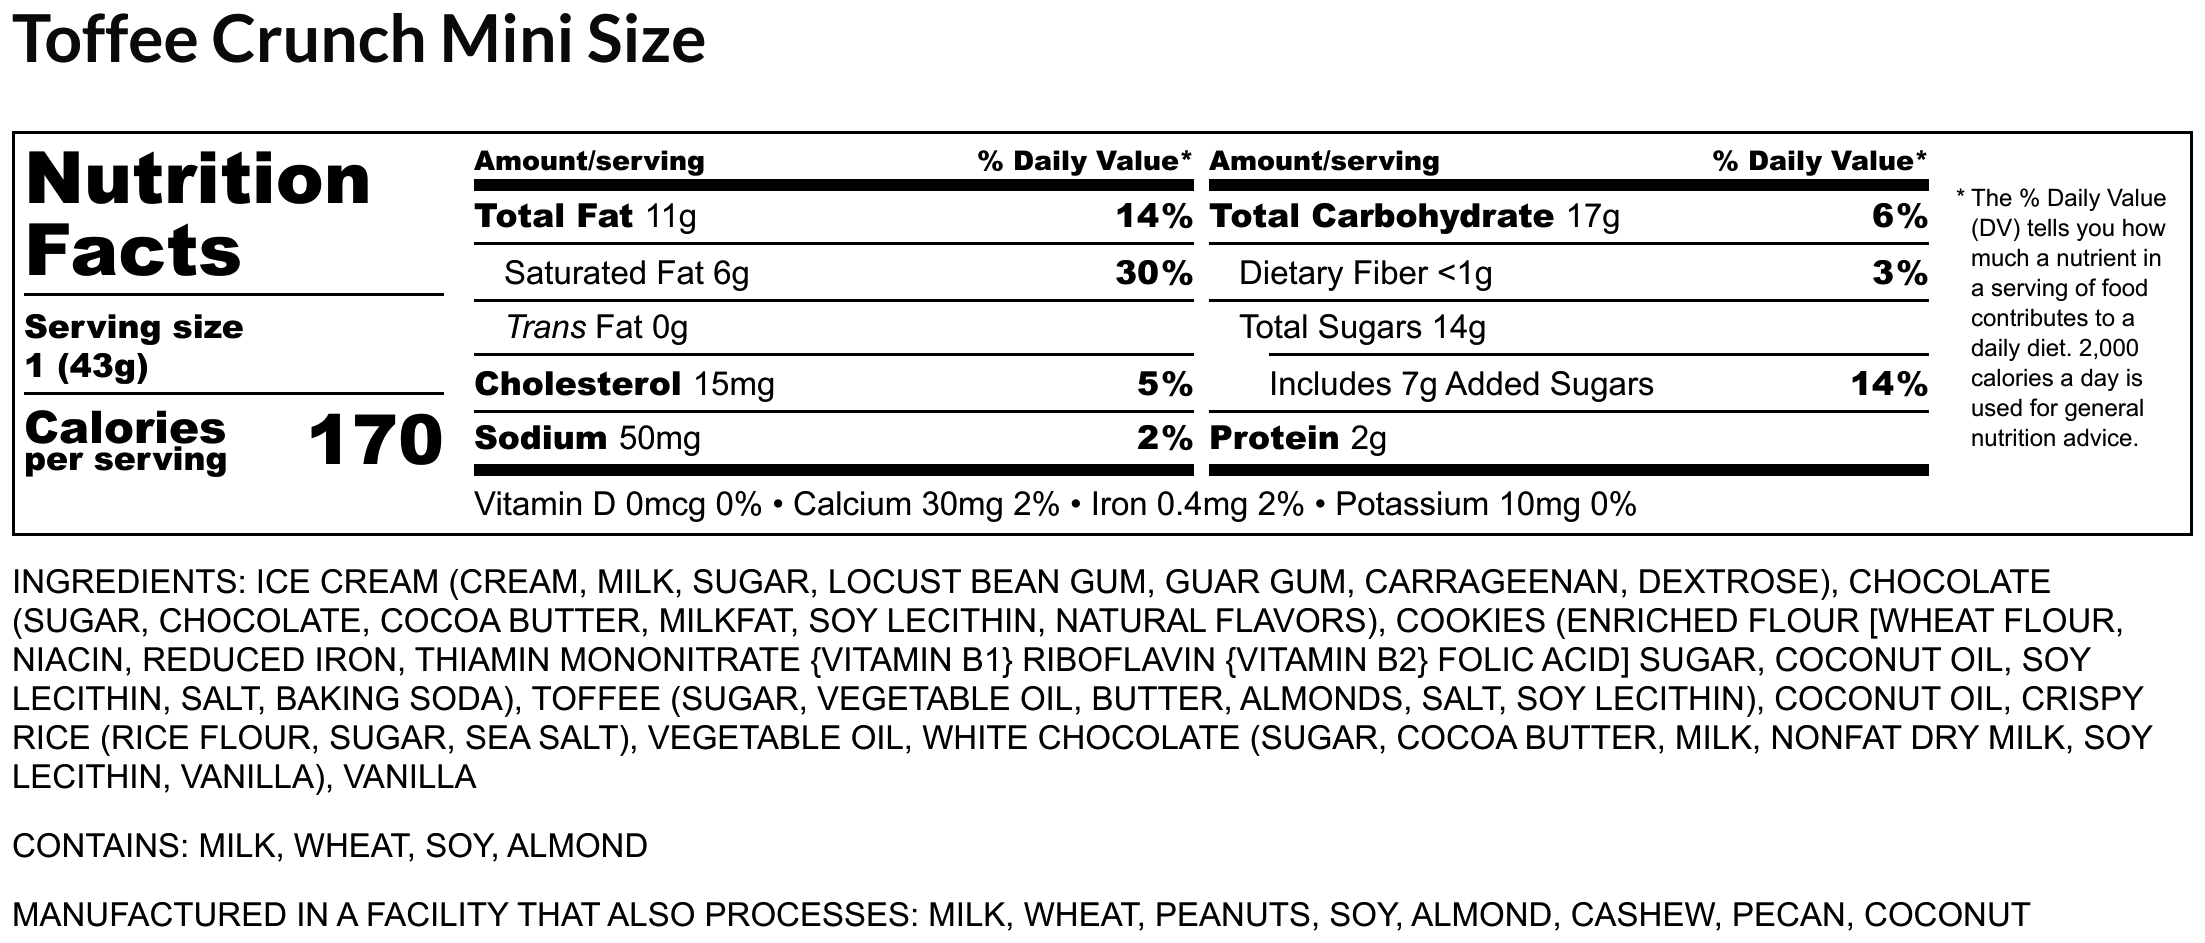 Toffee Crunch Mini Size